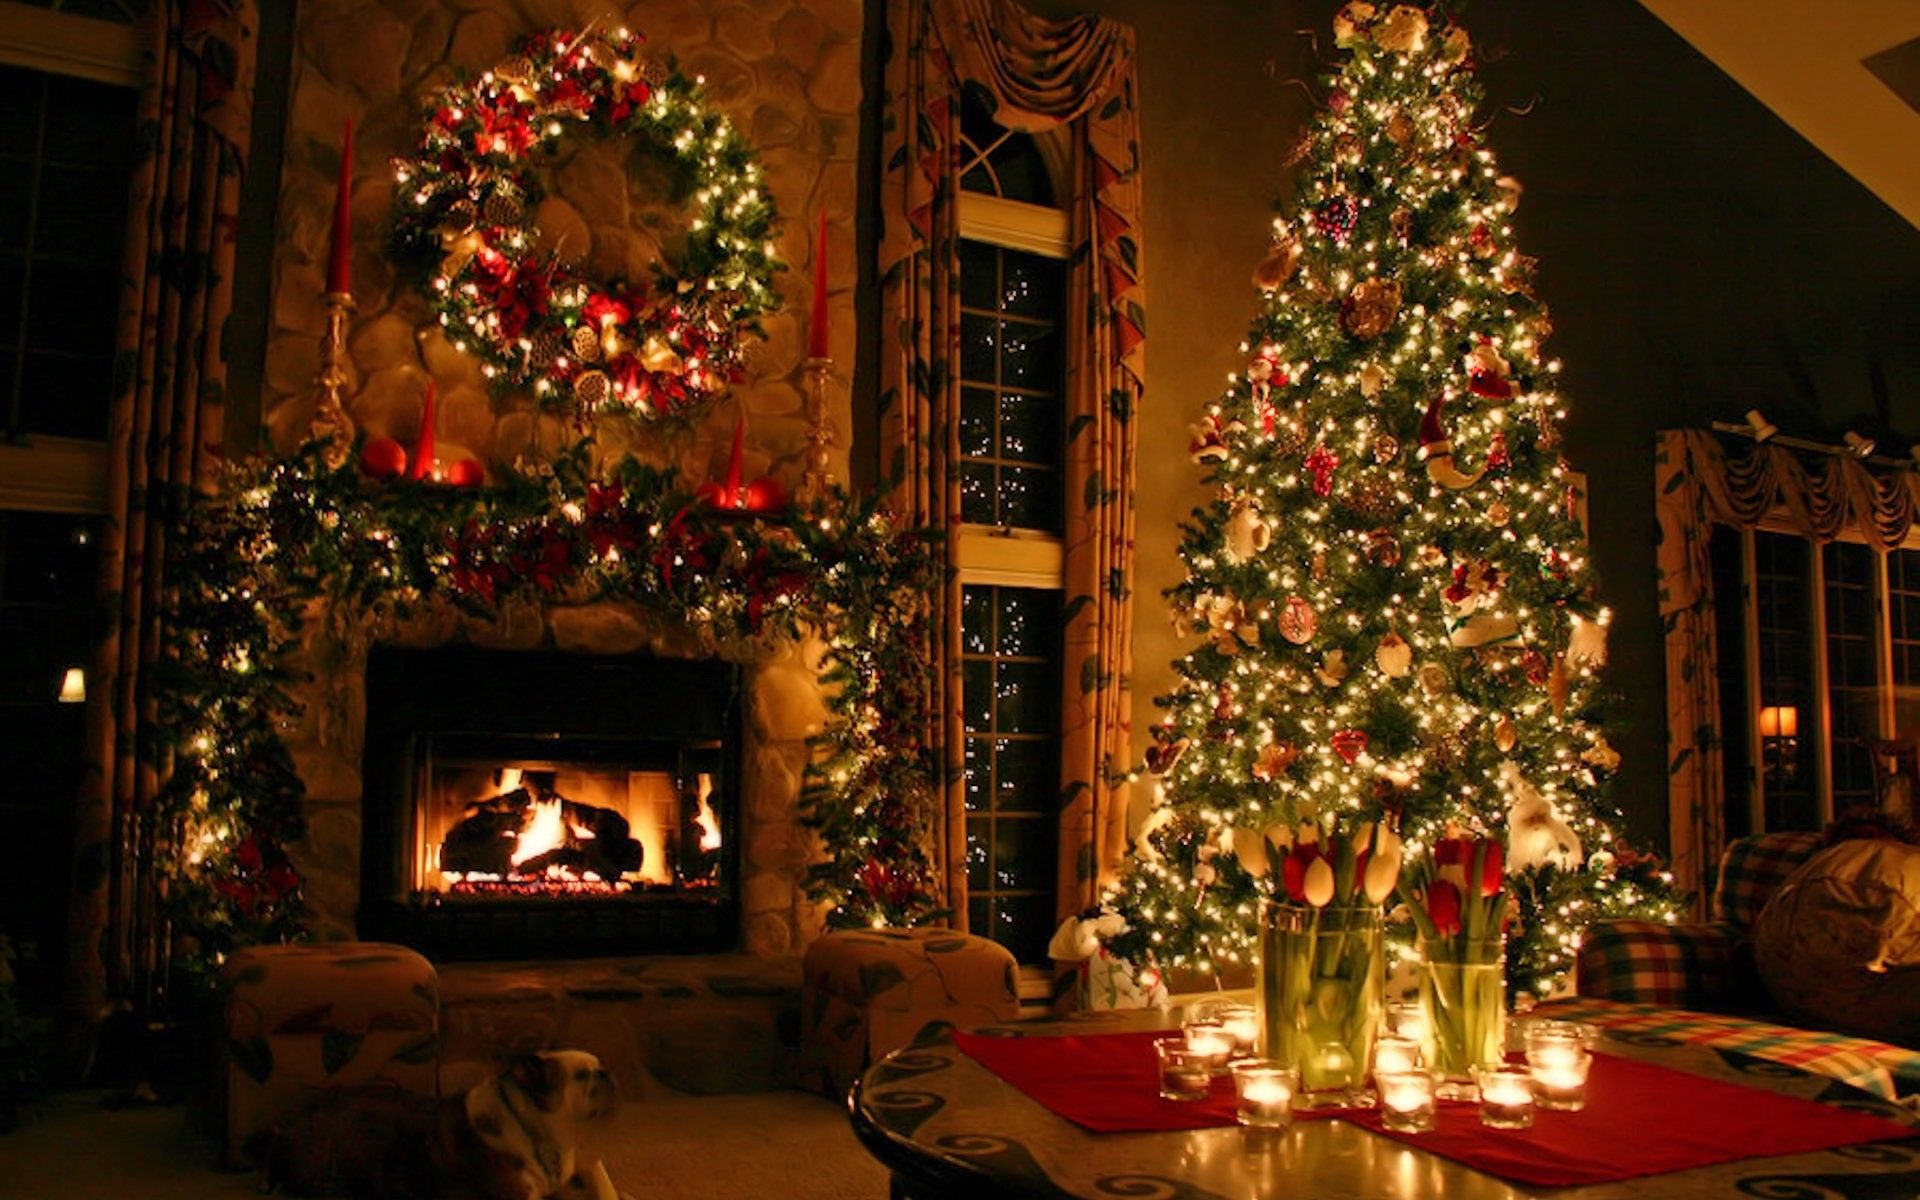 Christmas Tree wallpaper